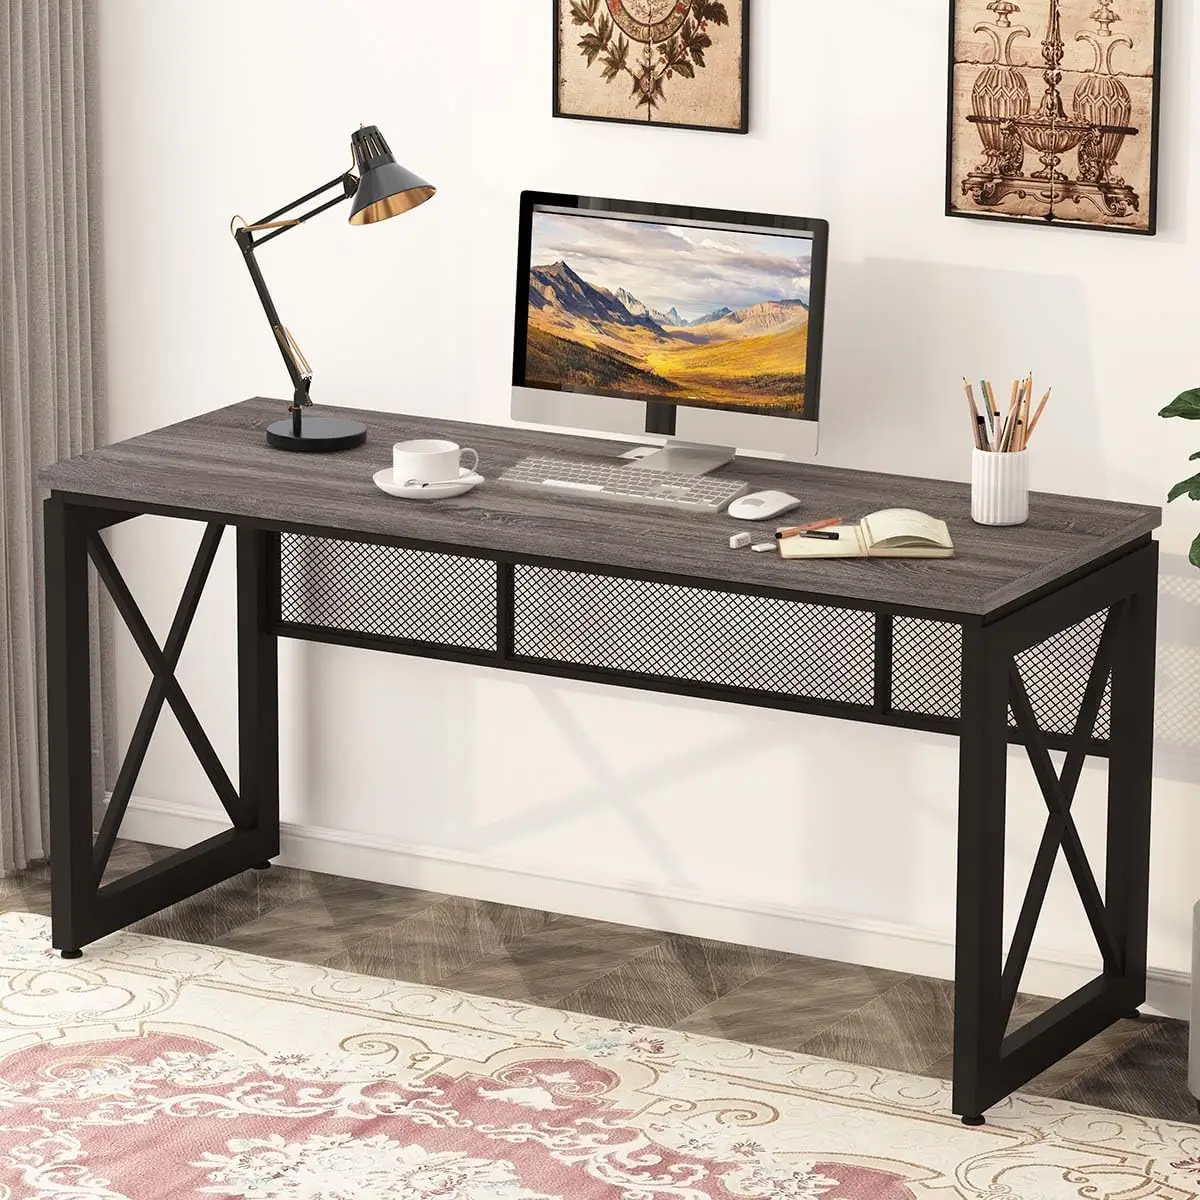 

BON AUGURE Industrial Computer Desk, Rustic Wood Desk for Home Office, Sturdy Metal Writing Work Desk (60 Inch, Dark Grey Oak)